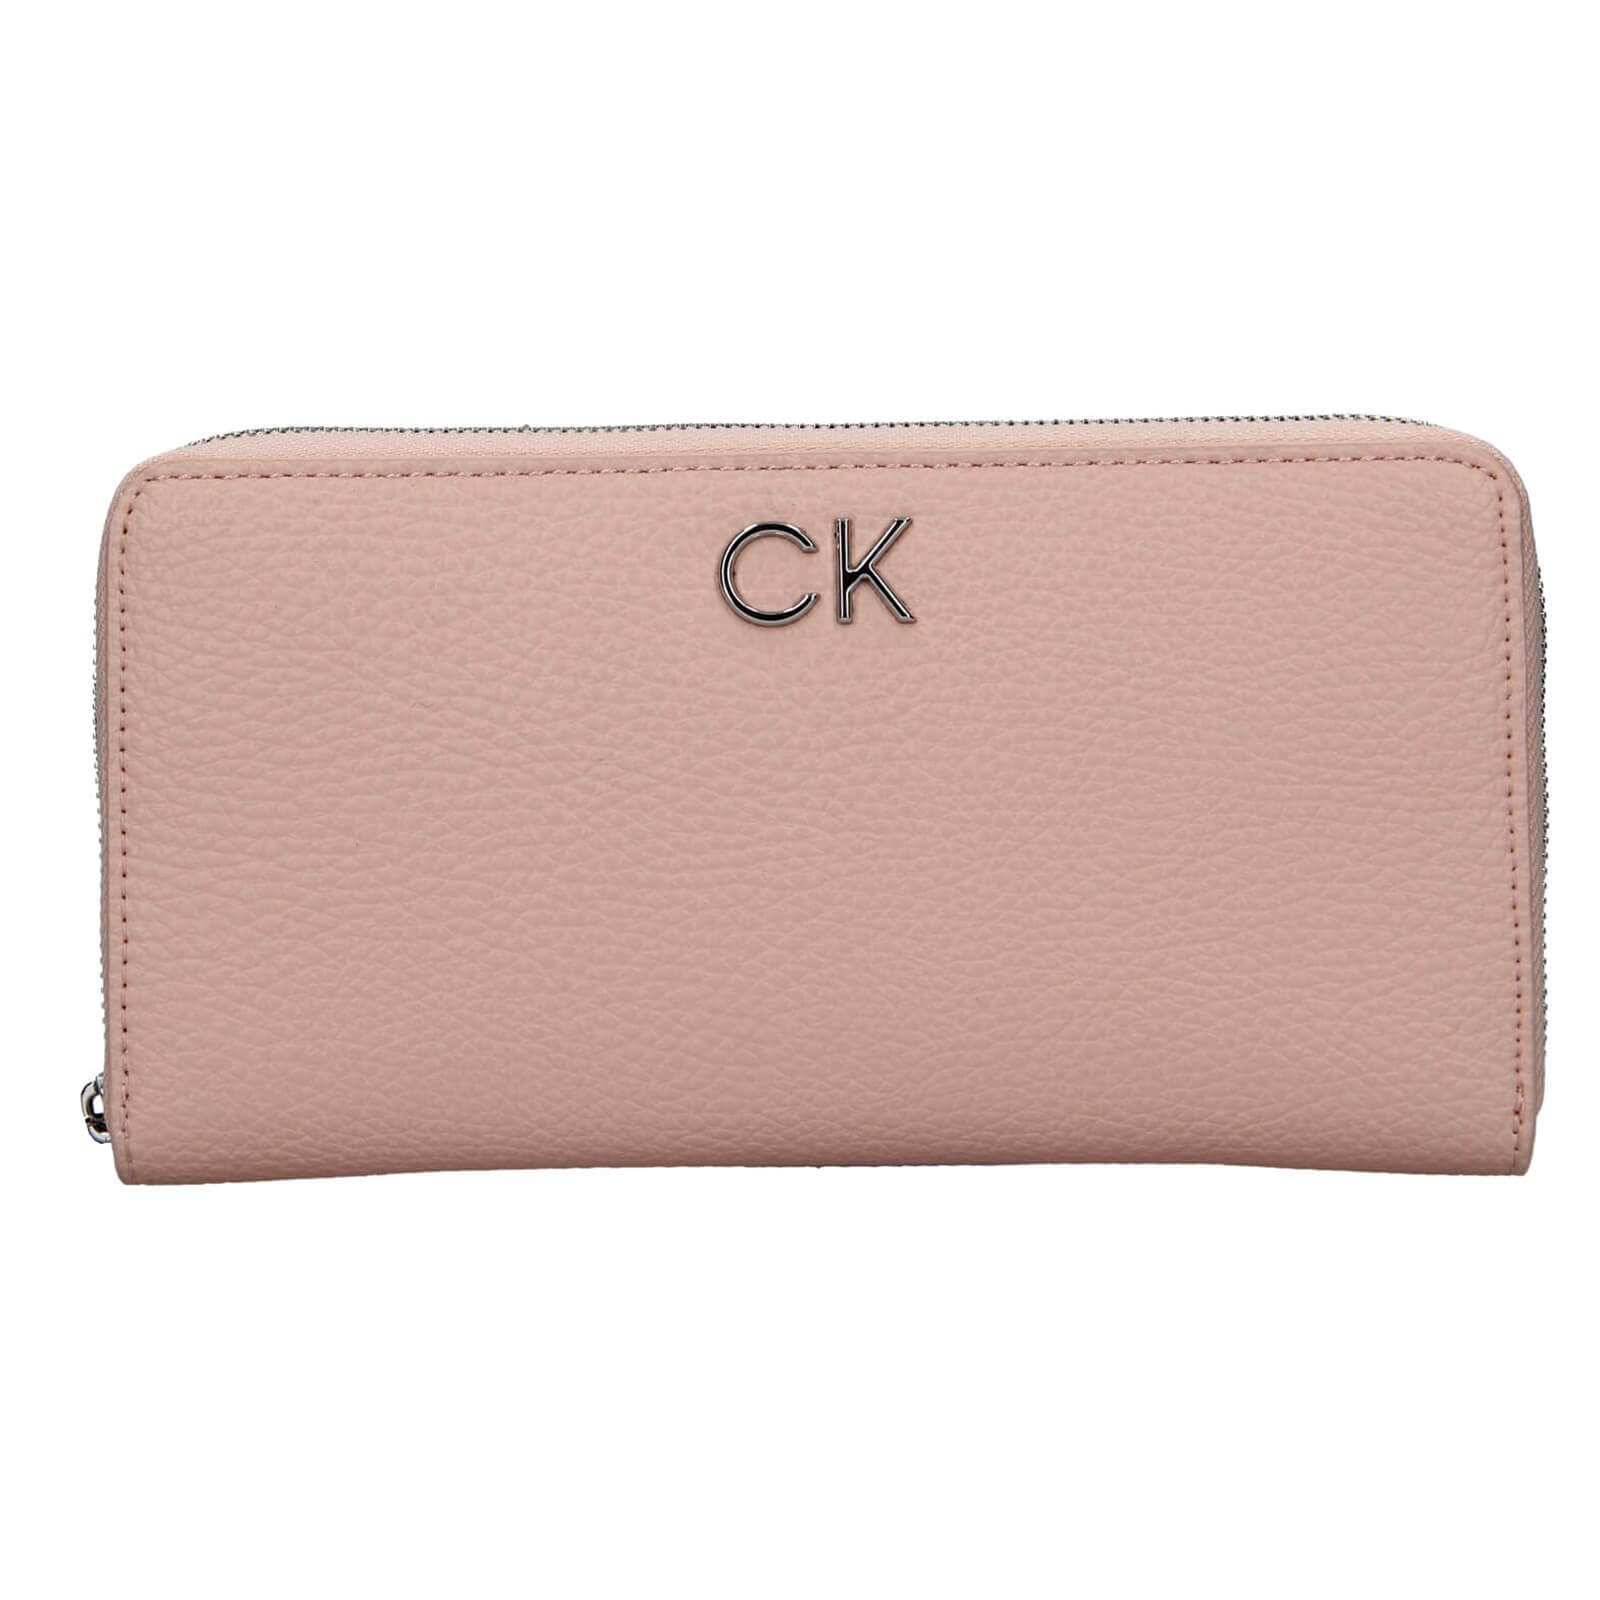 Dámská peněženka Calvin Klein Krennet - růžová